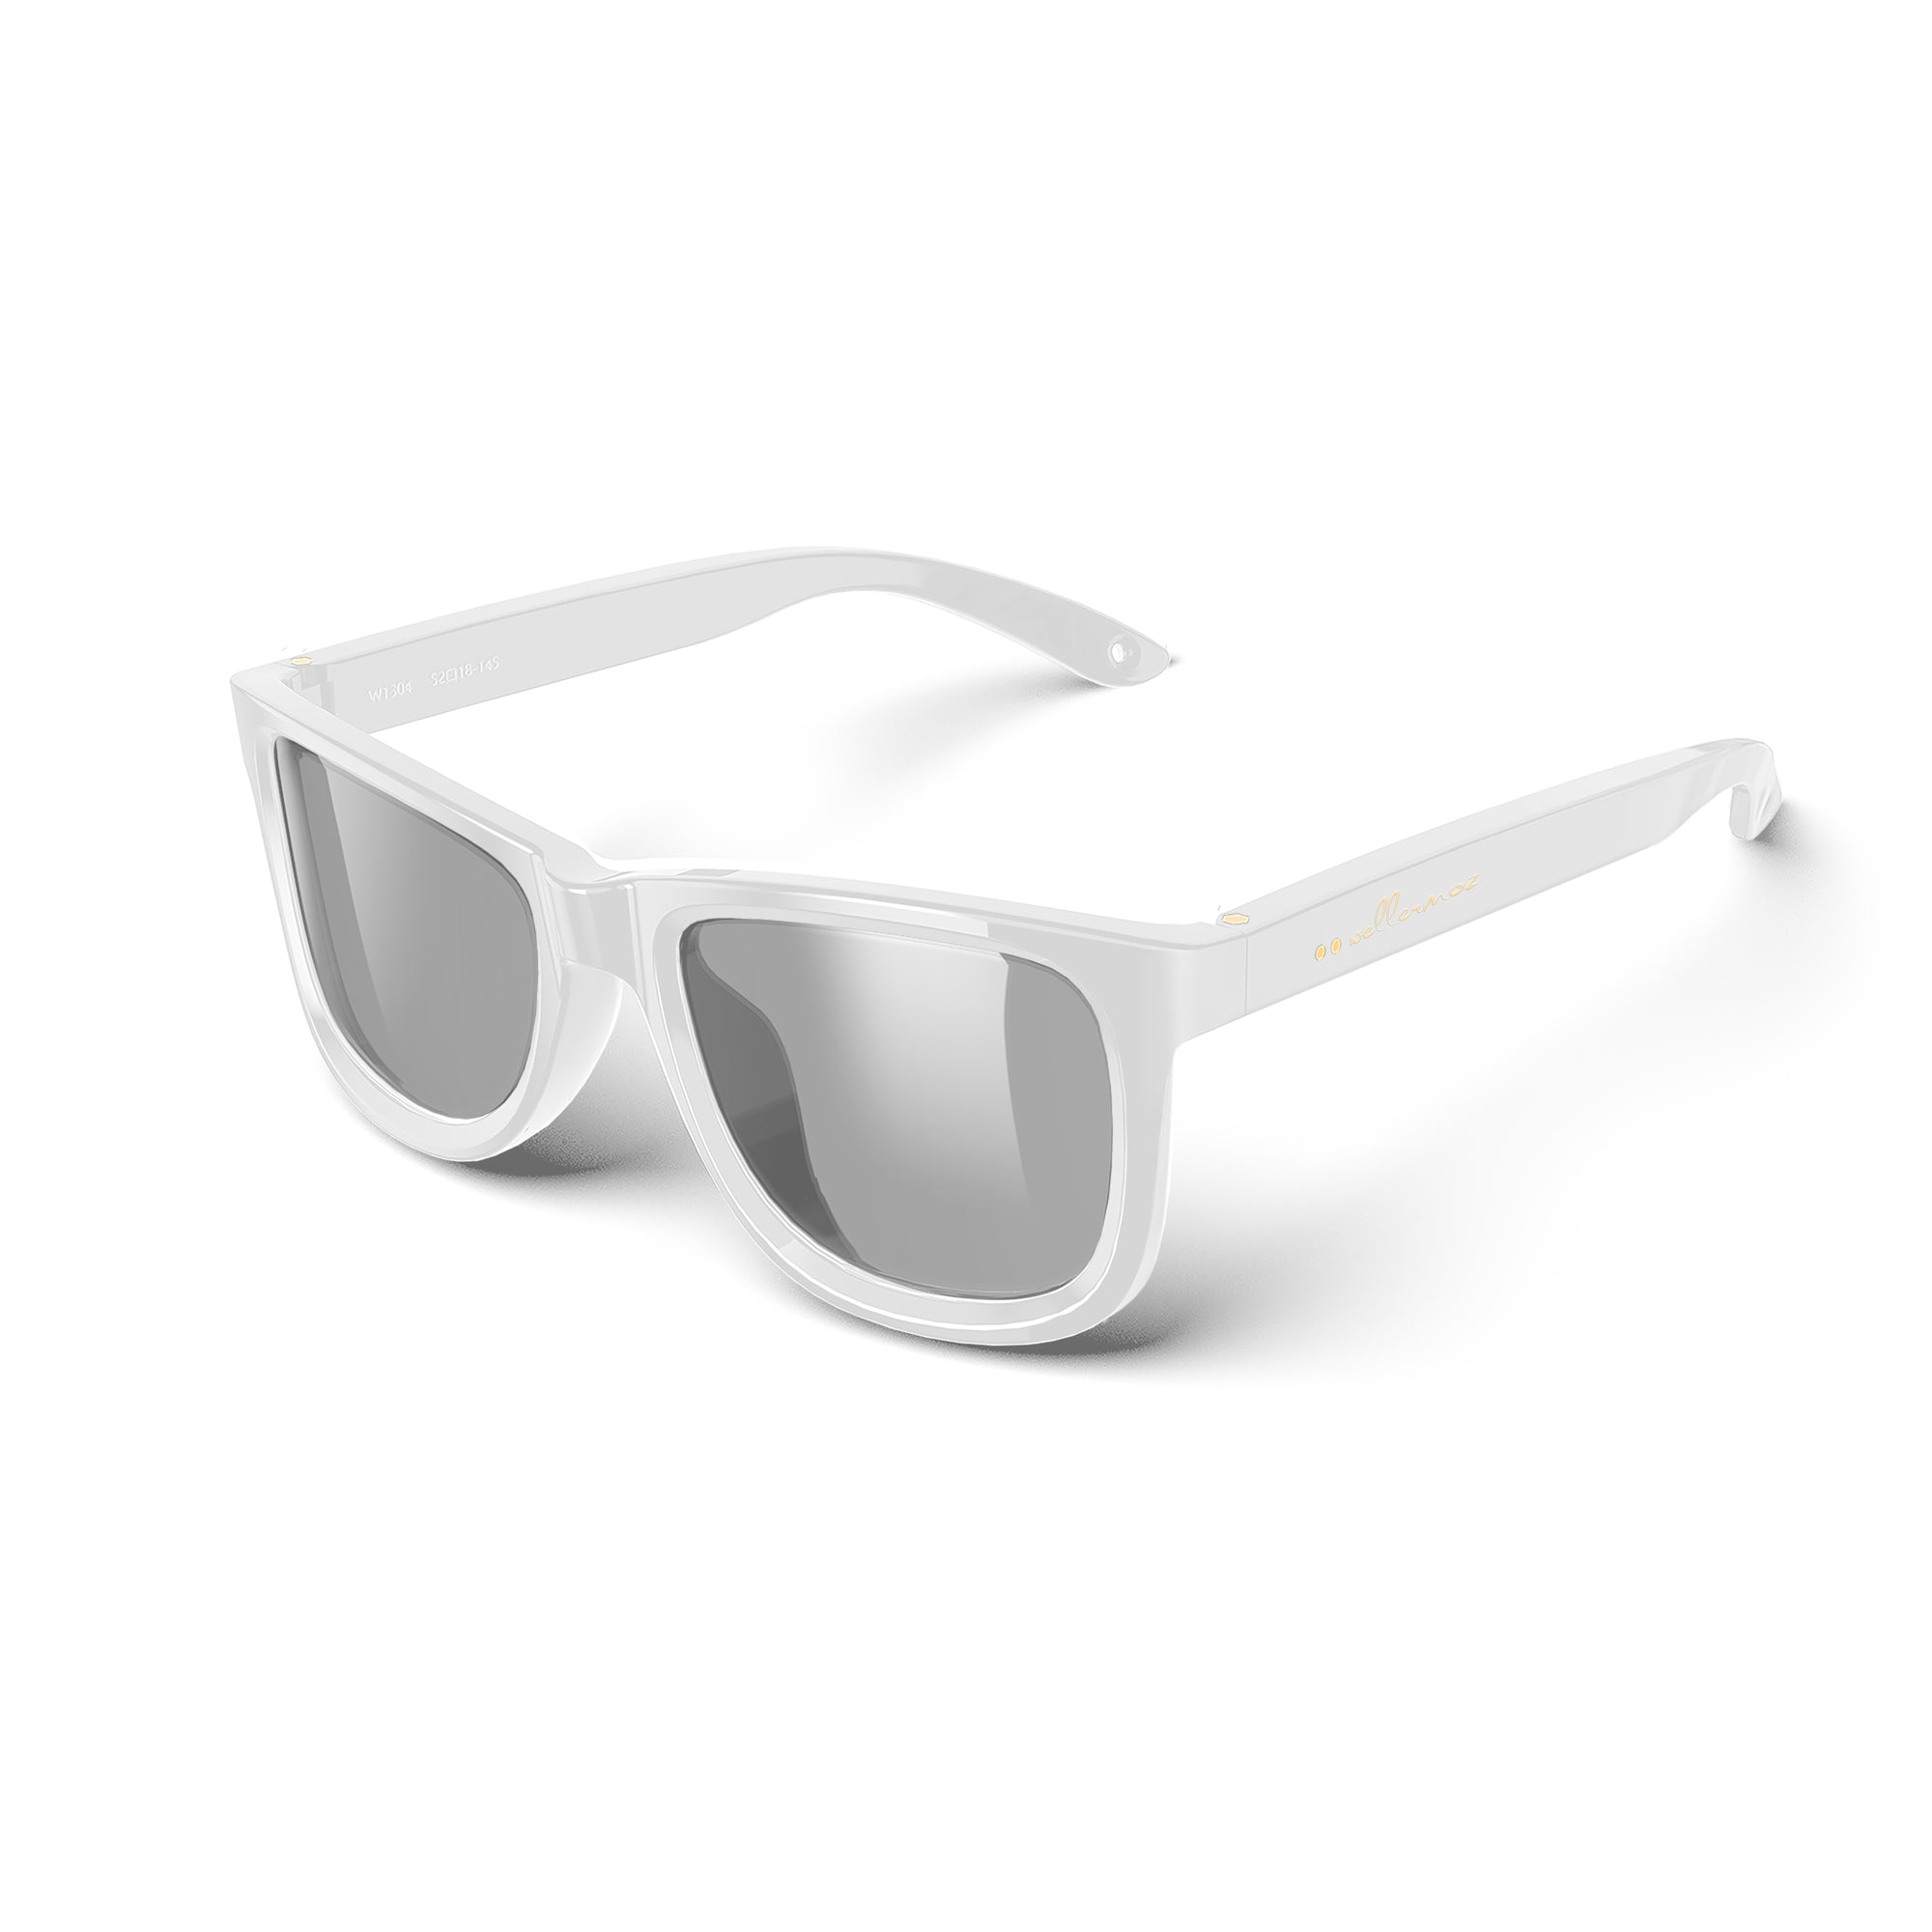 Wellermoz Smart Electrochromic Sunglasses